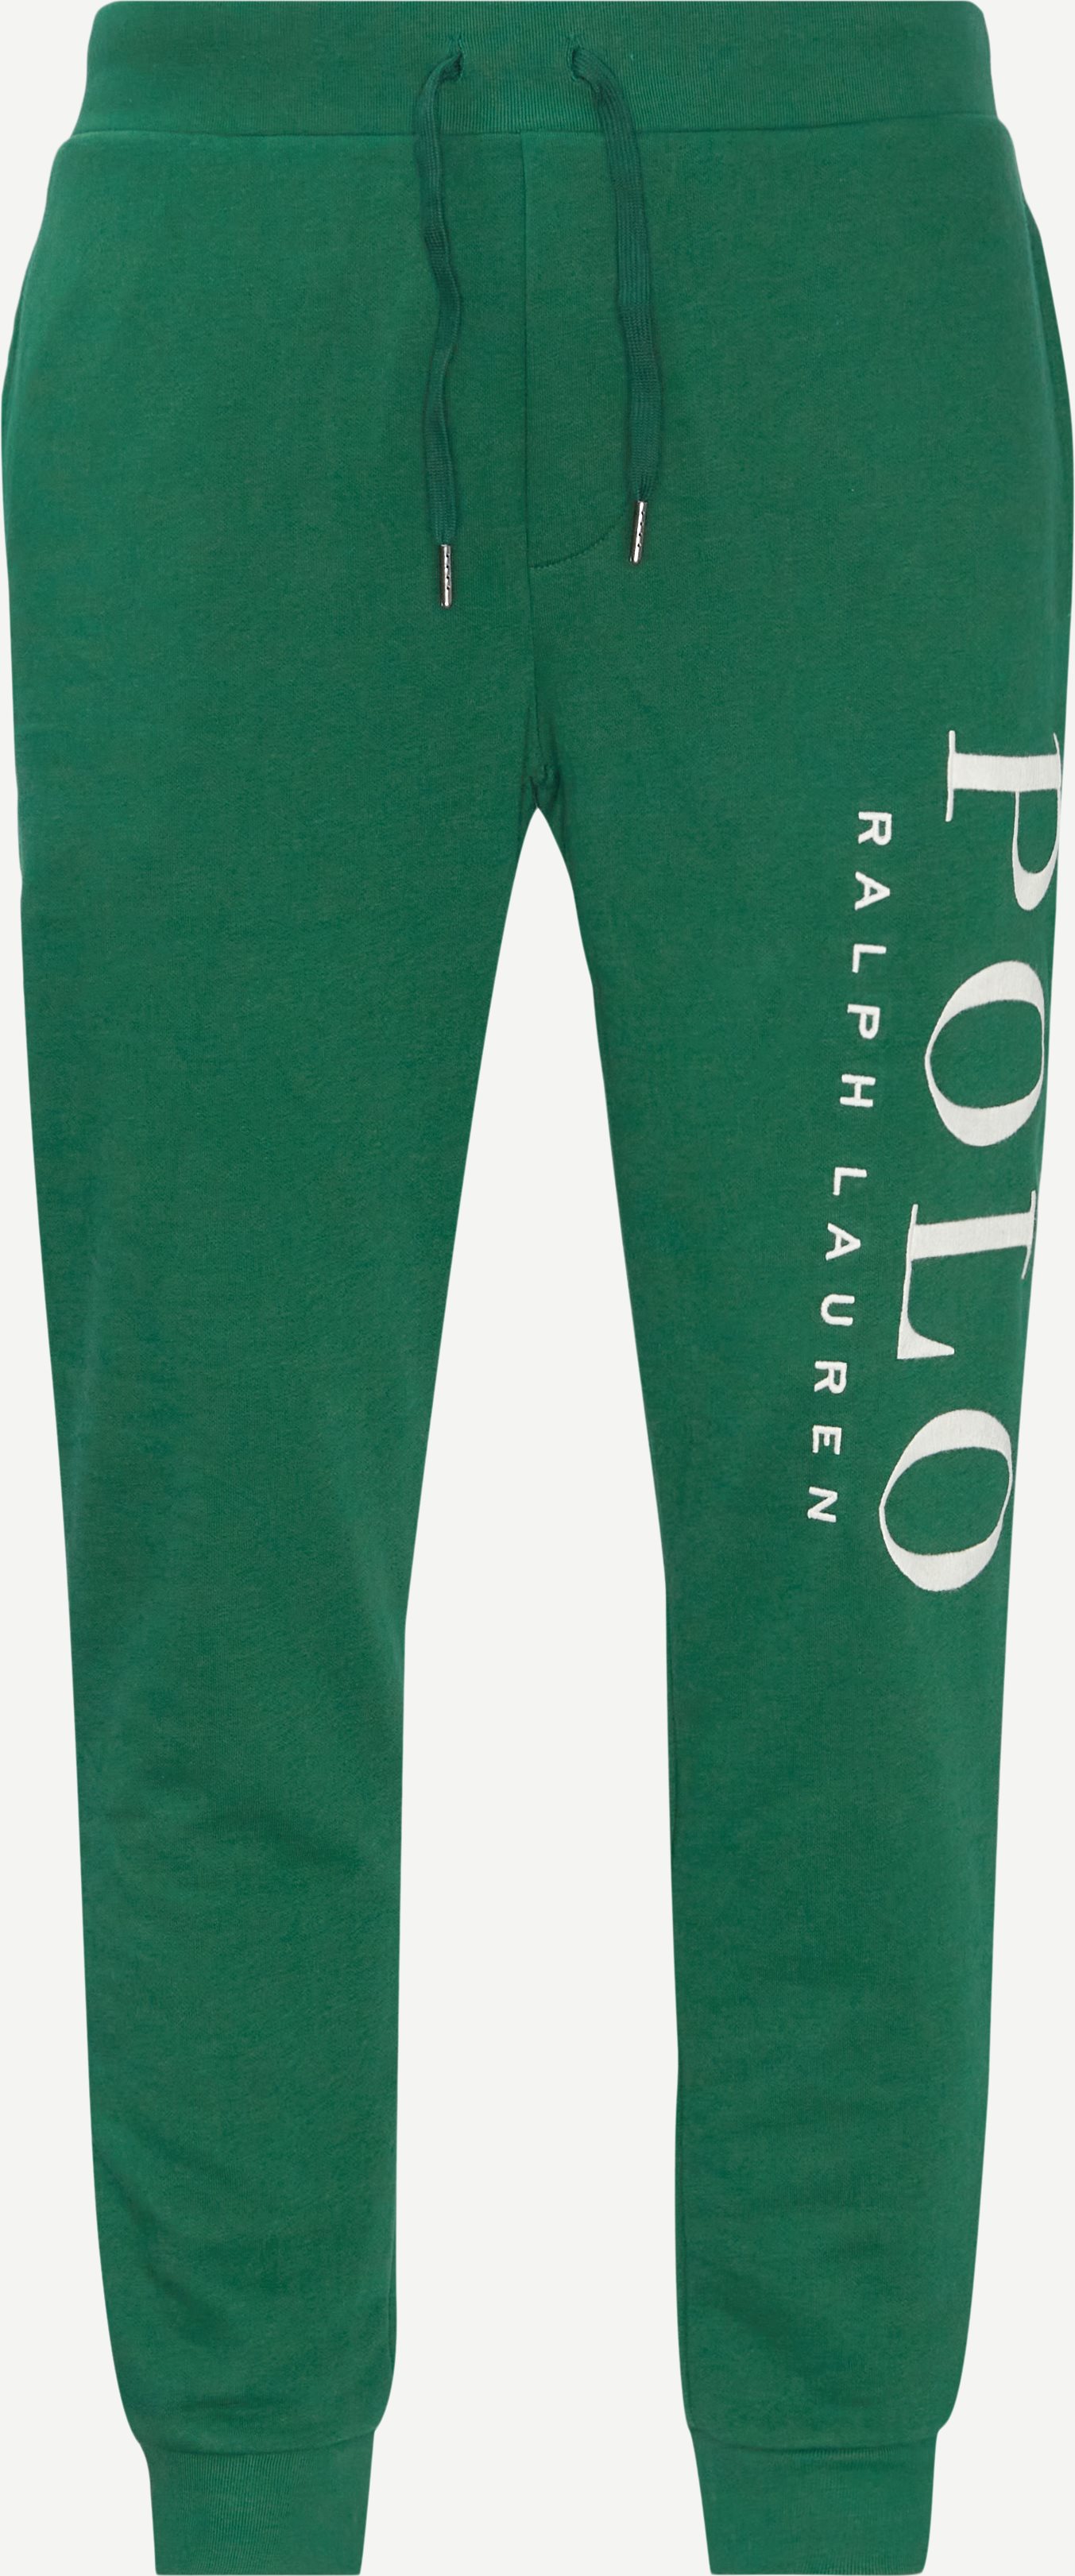 Trousers - Regular fit - Green